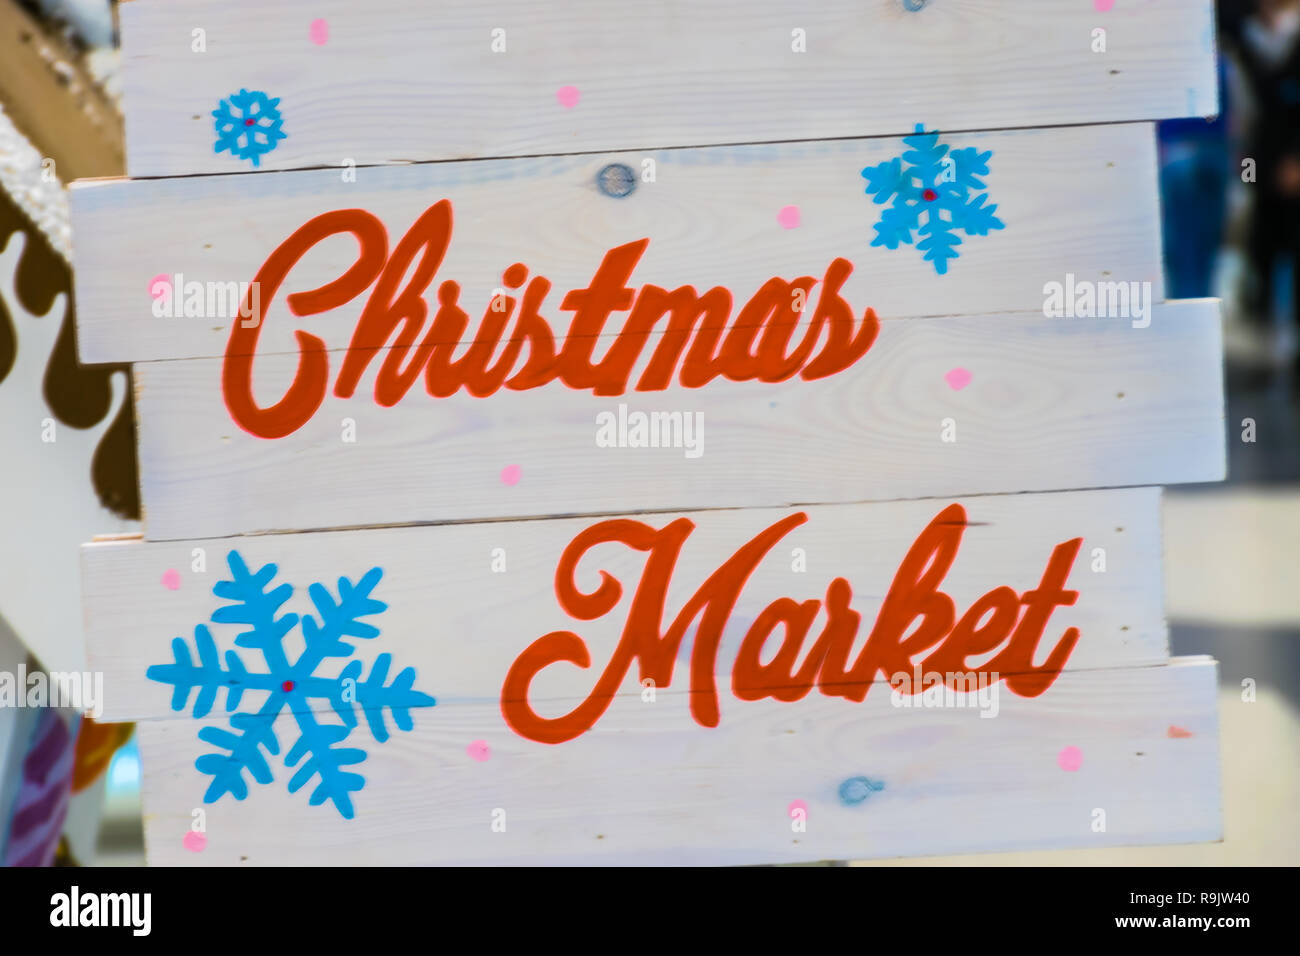 Christmas Market text banner Stock Photo